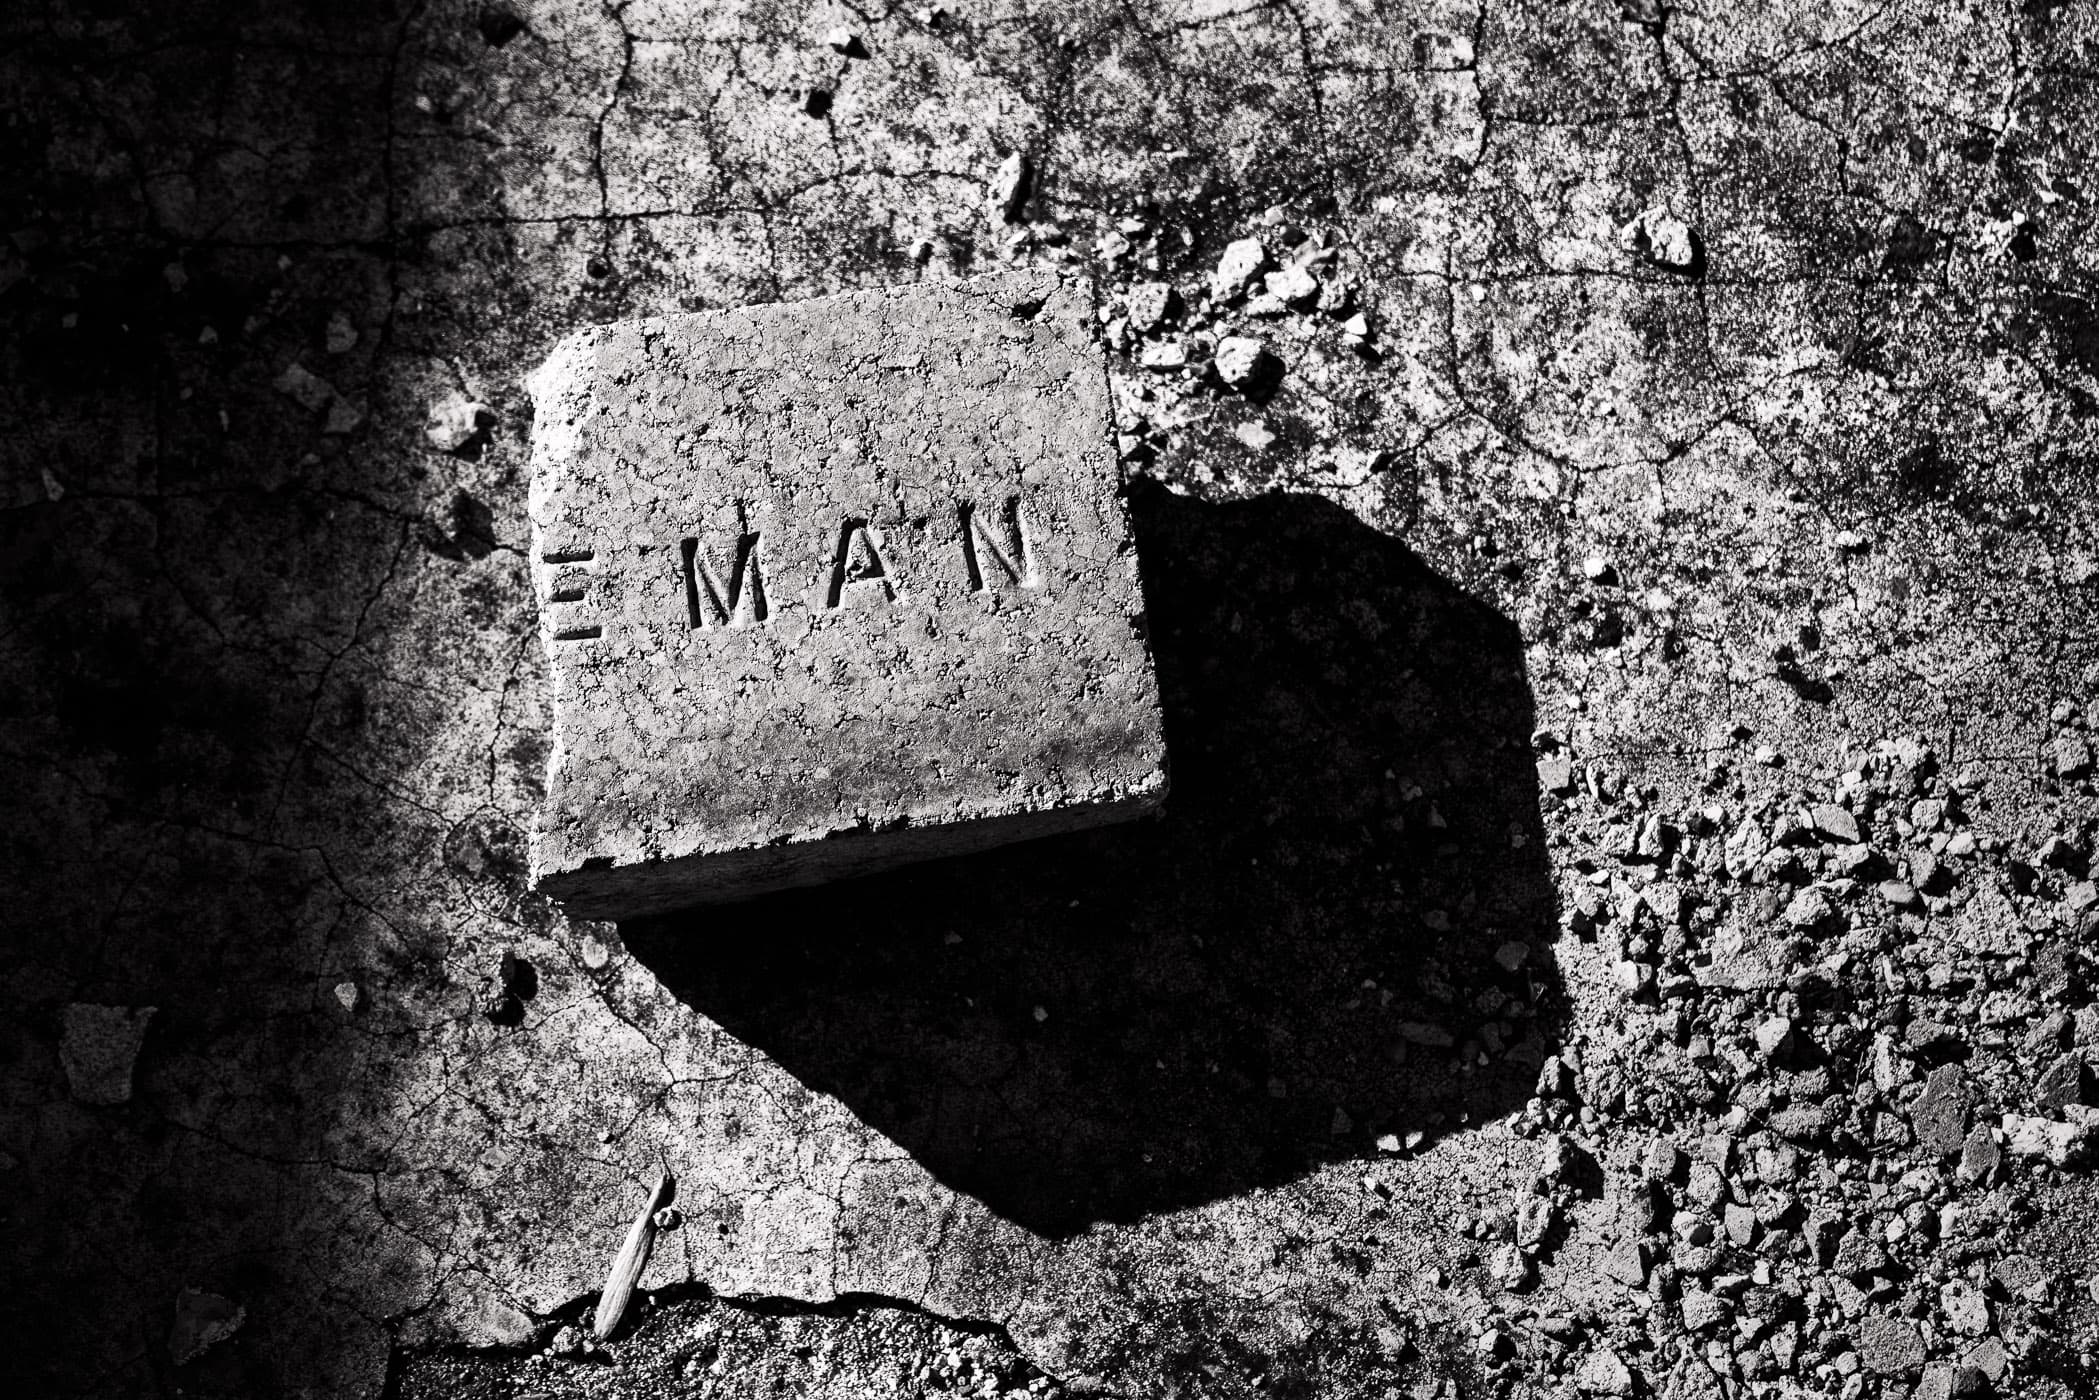 A old brick found among the ruins of Fort Washita, Oklahoma.